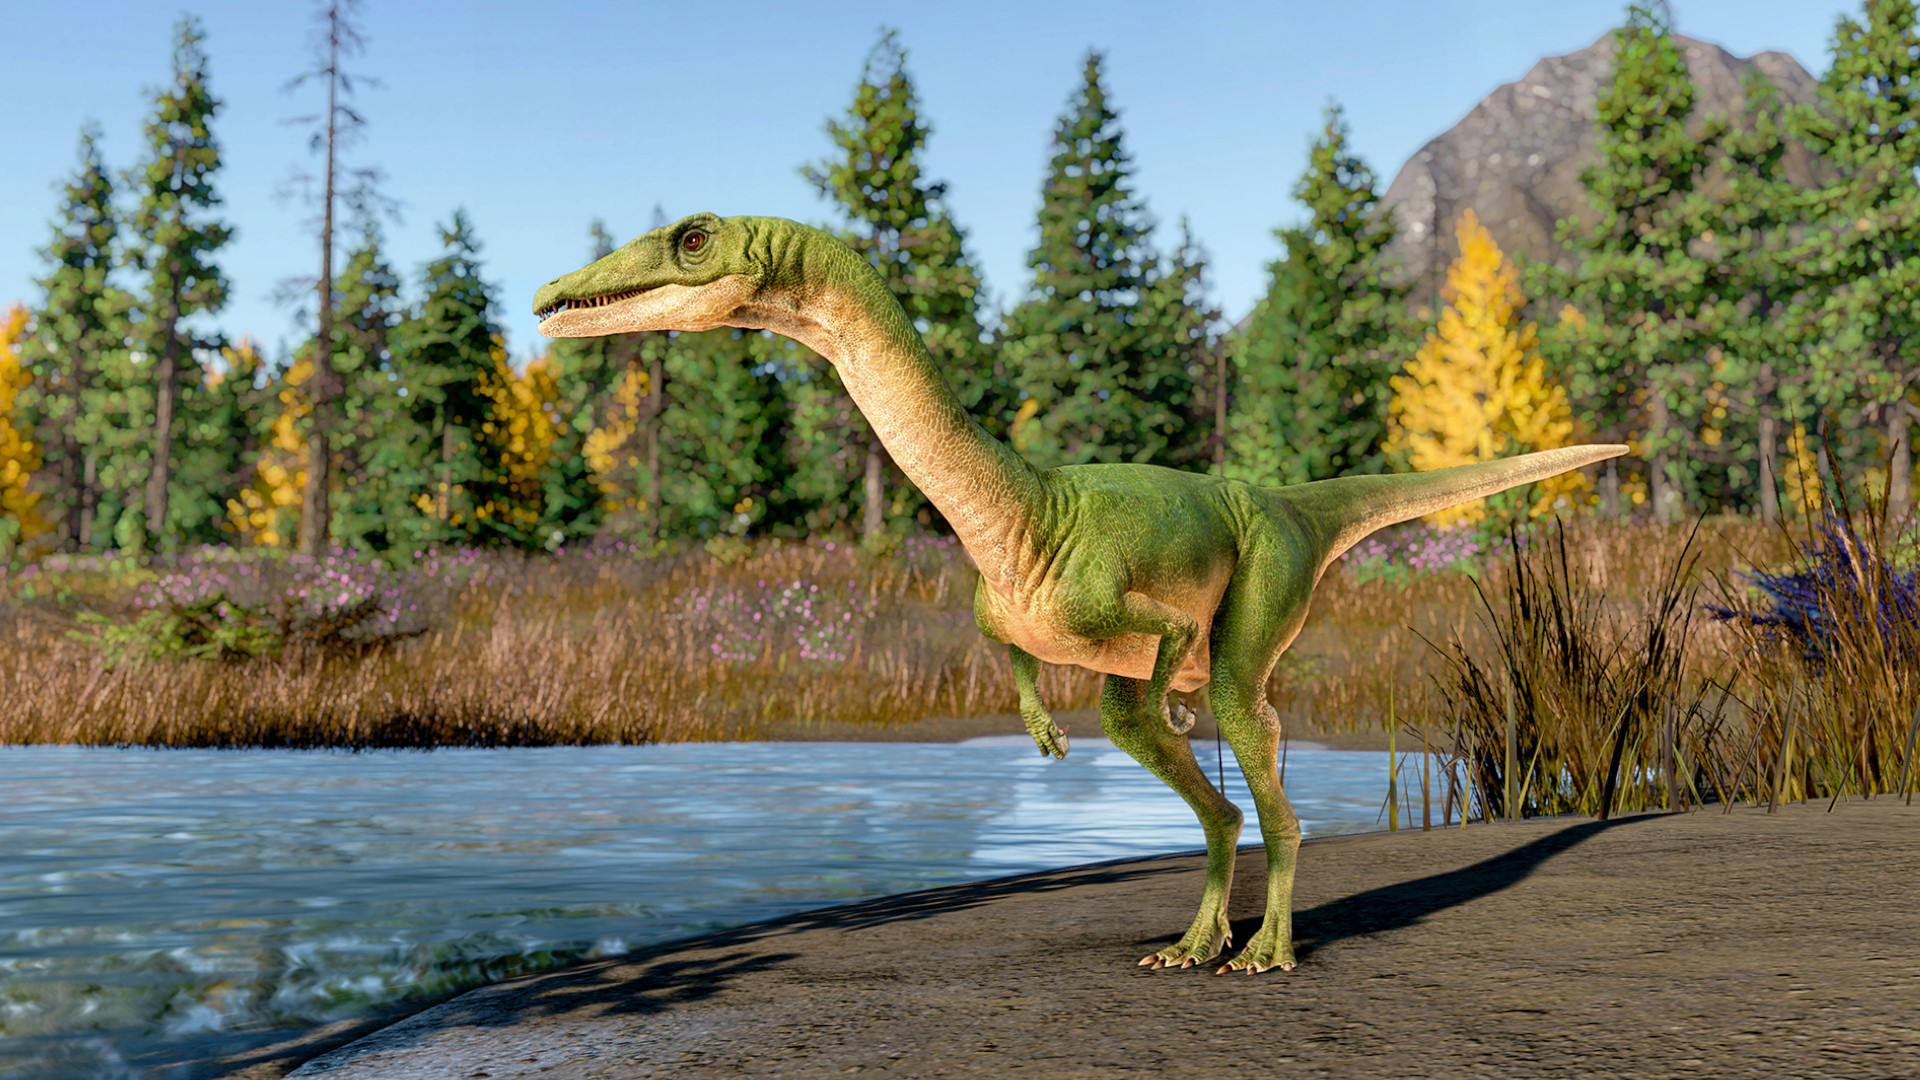 Jurassic World Evolution 2 သည် စိတ်အနှောက်အယှက်ဖြစ်စေသော အလုပ်များကို ပြန်လည်လျှော့ချနေပါသည်။